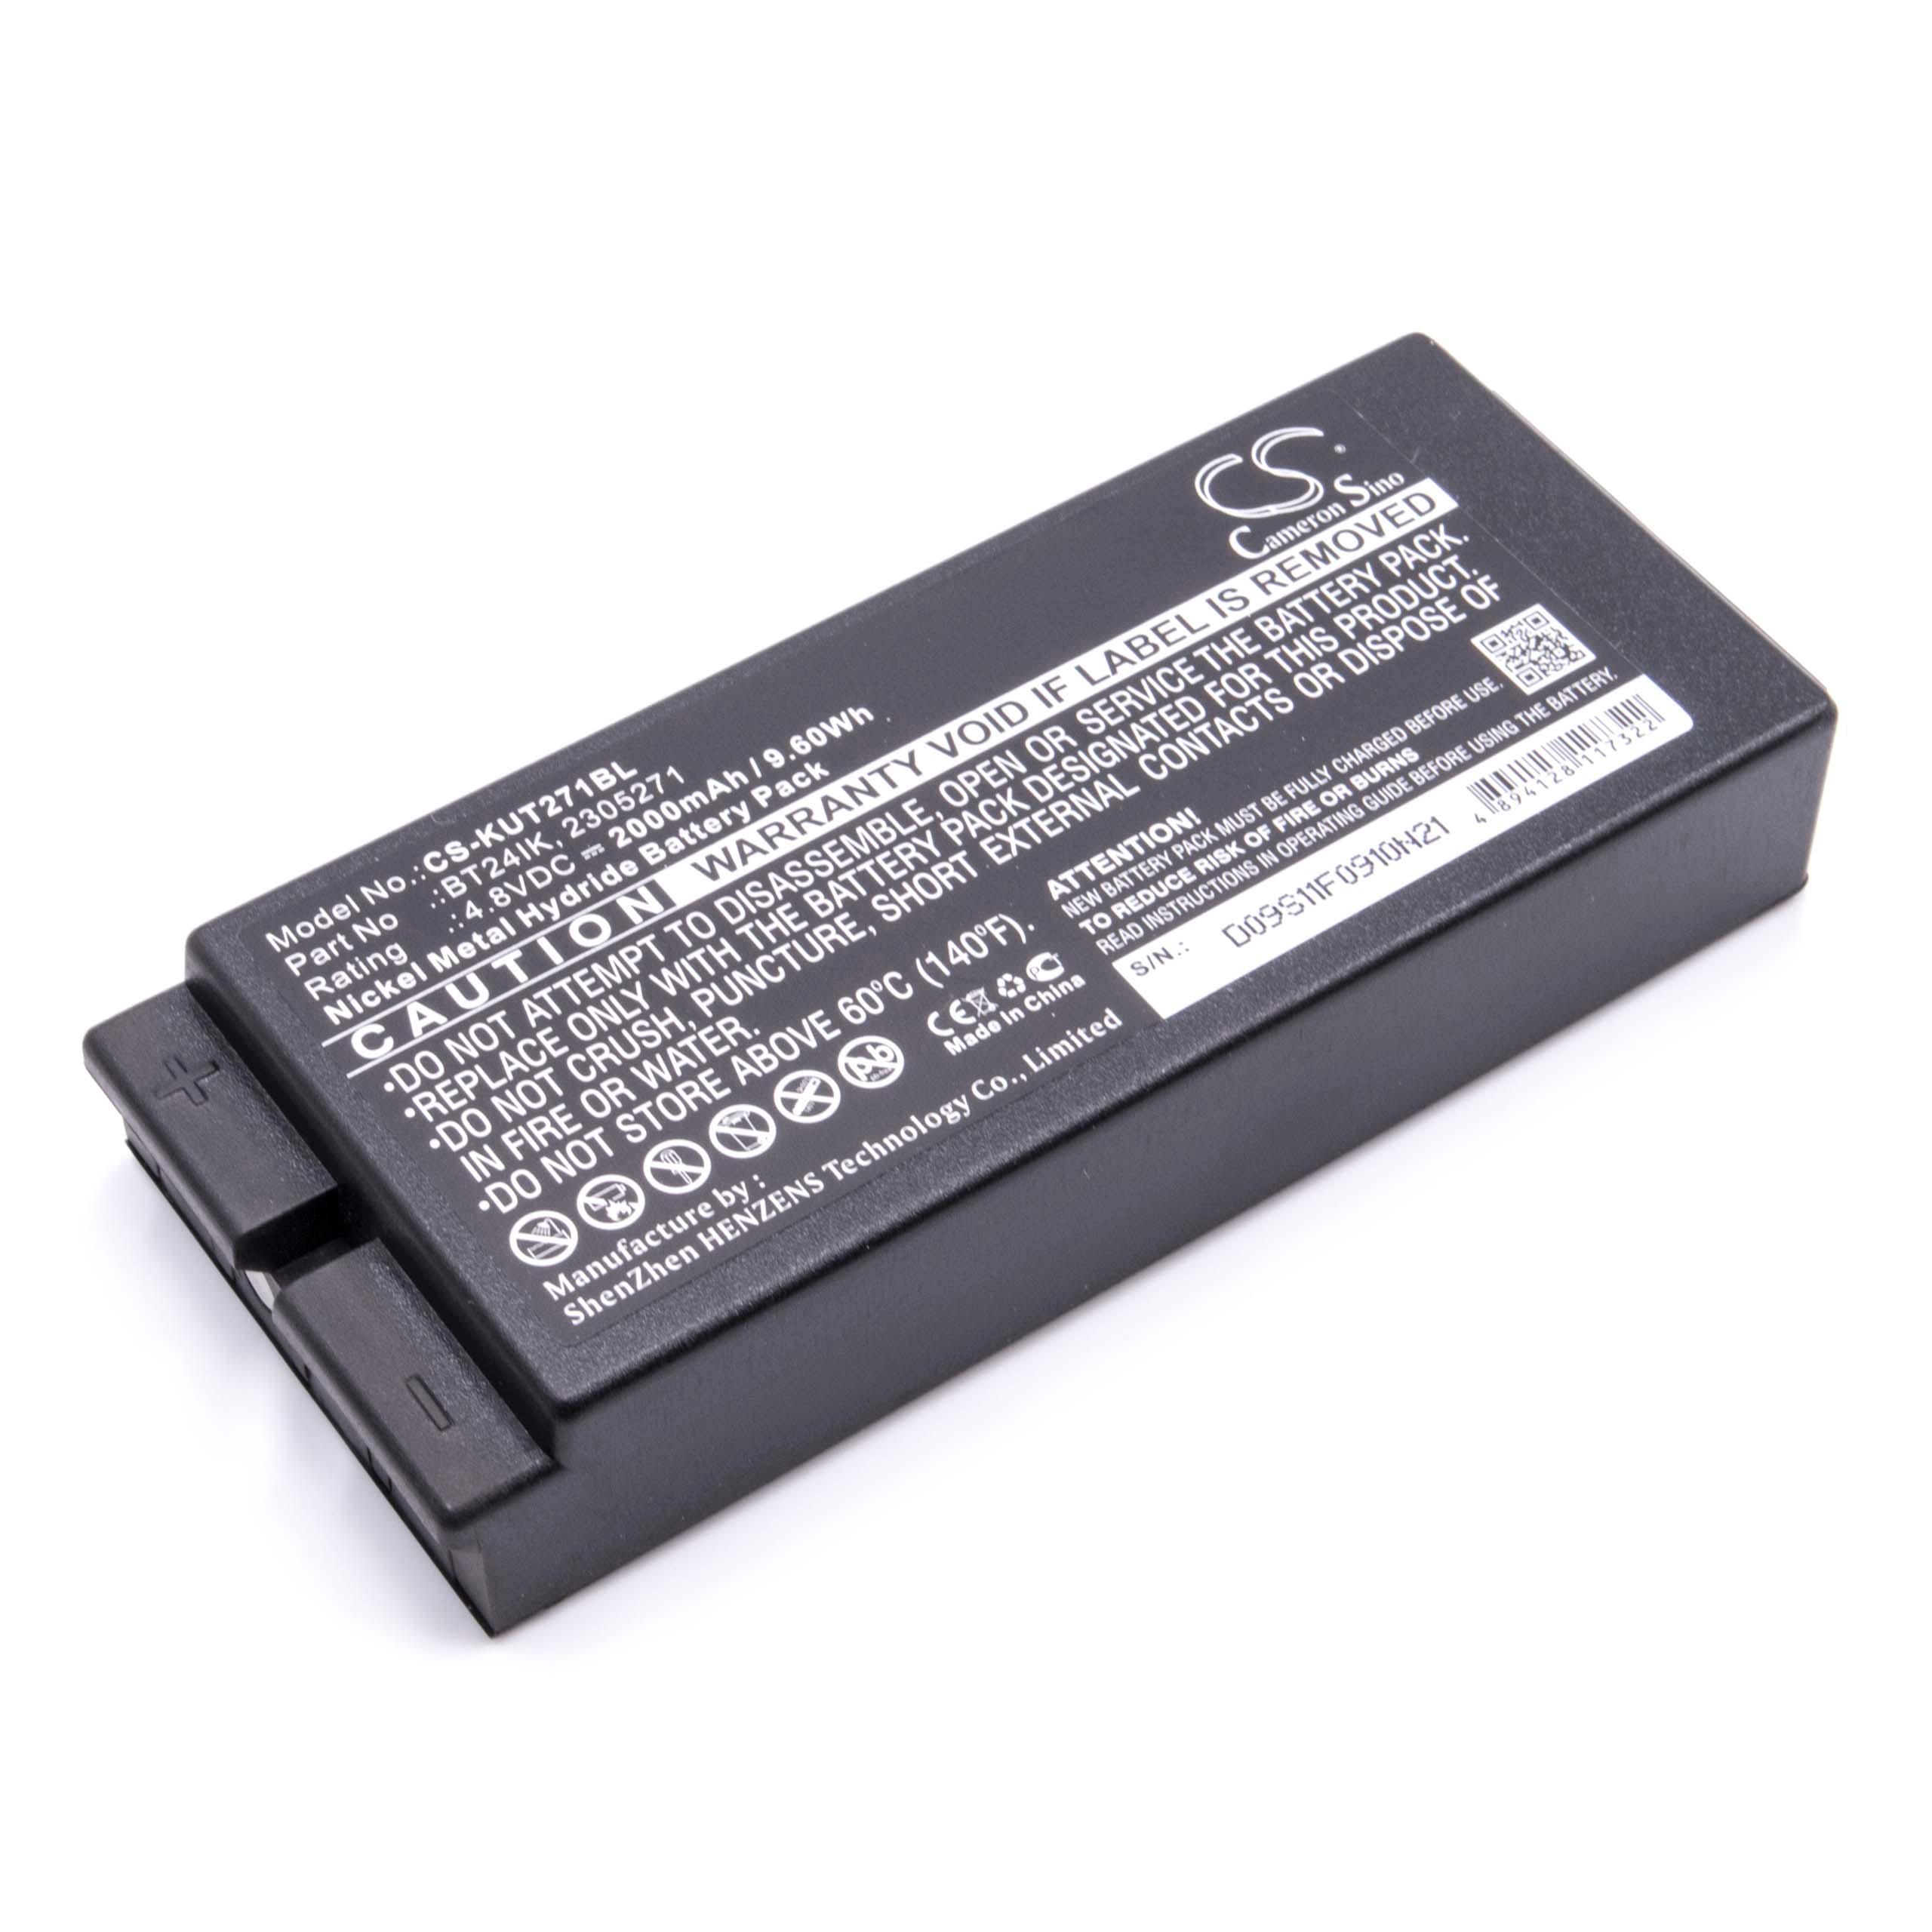 Batería reemplaza Danfoss 2305271, BT24IK para mando distancia industrial Ikusi - 2000 mAh 4,8 V NiMH